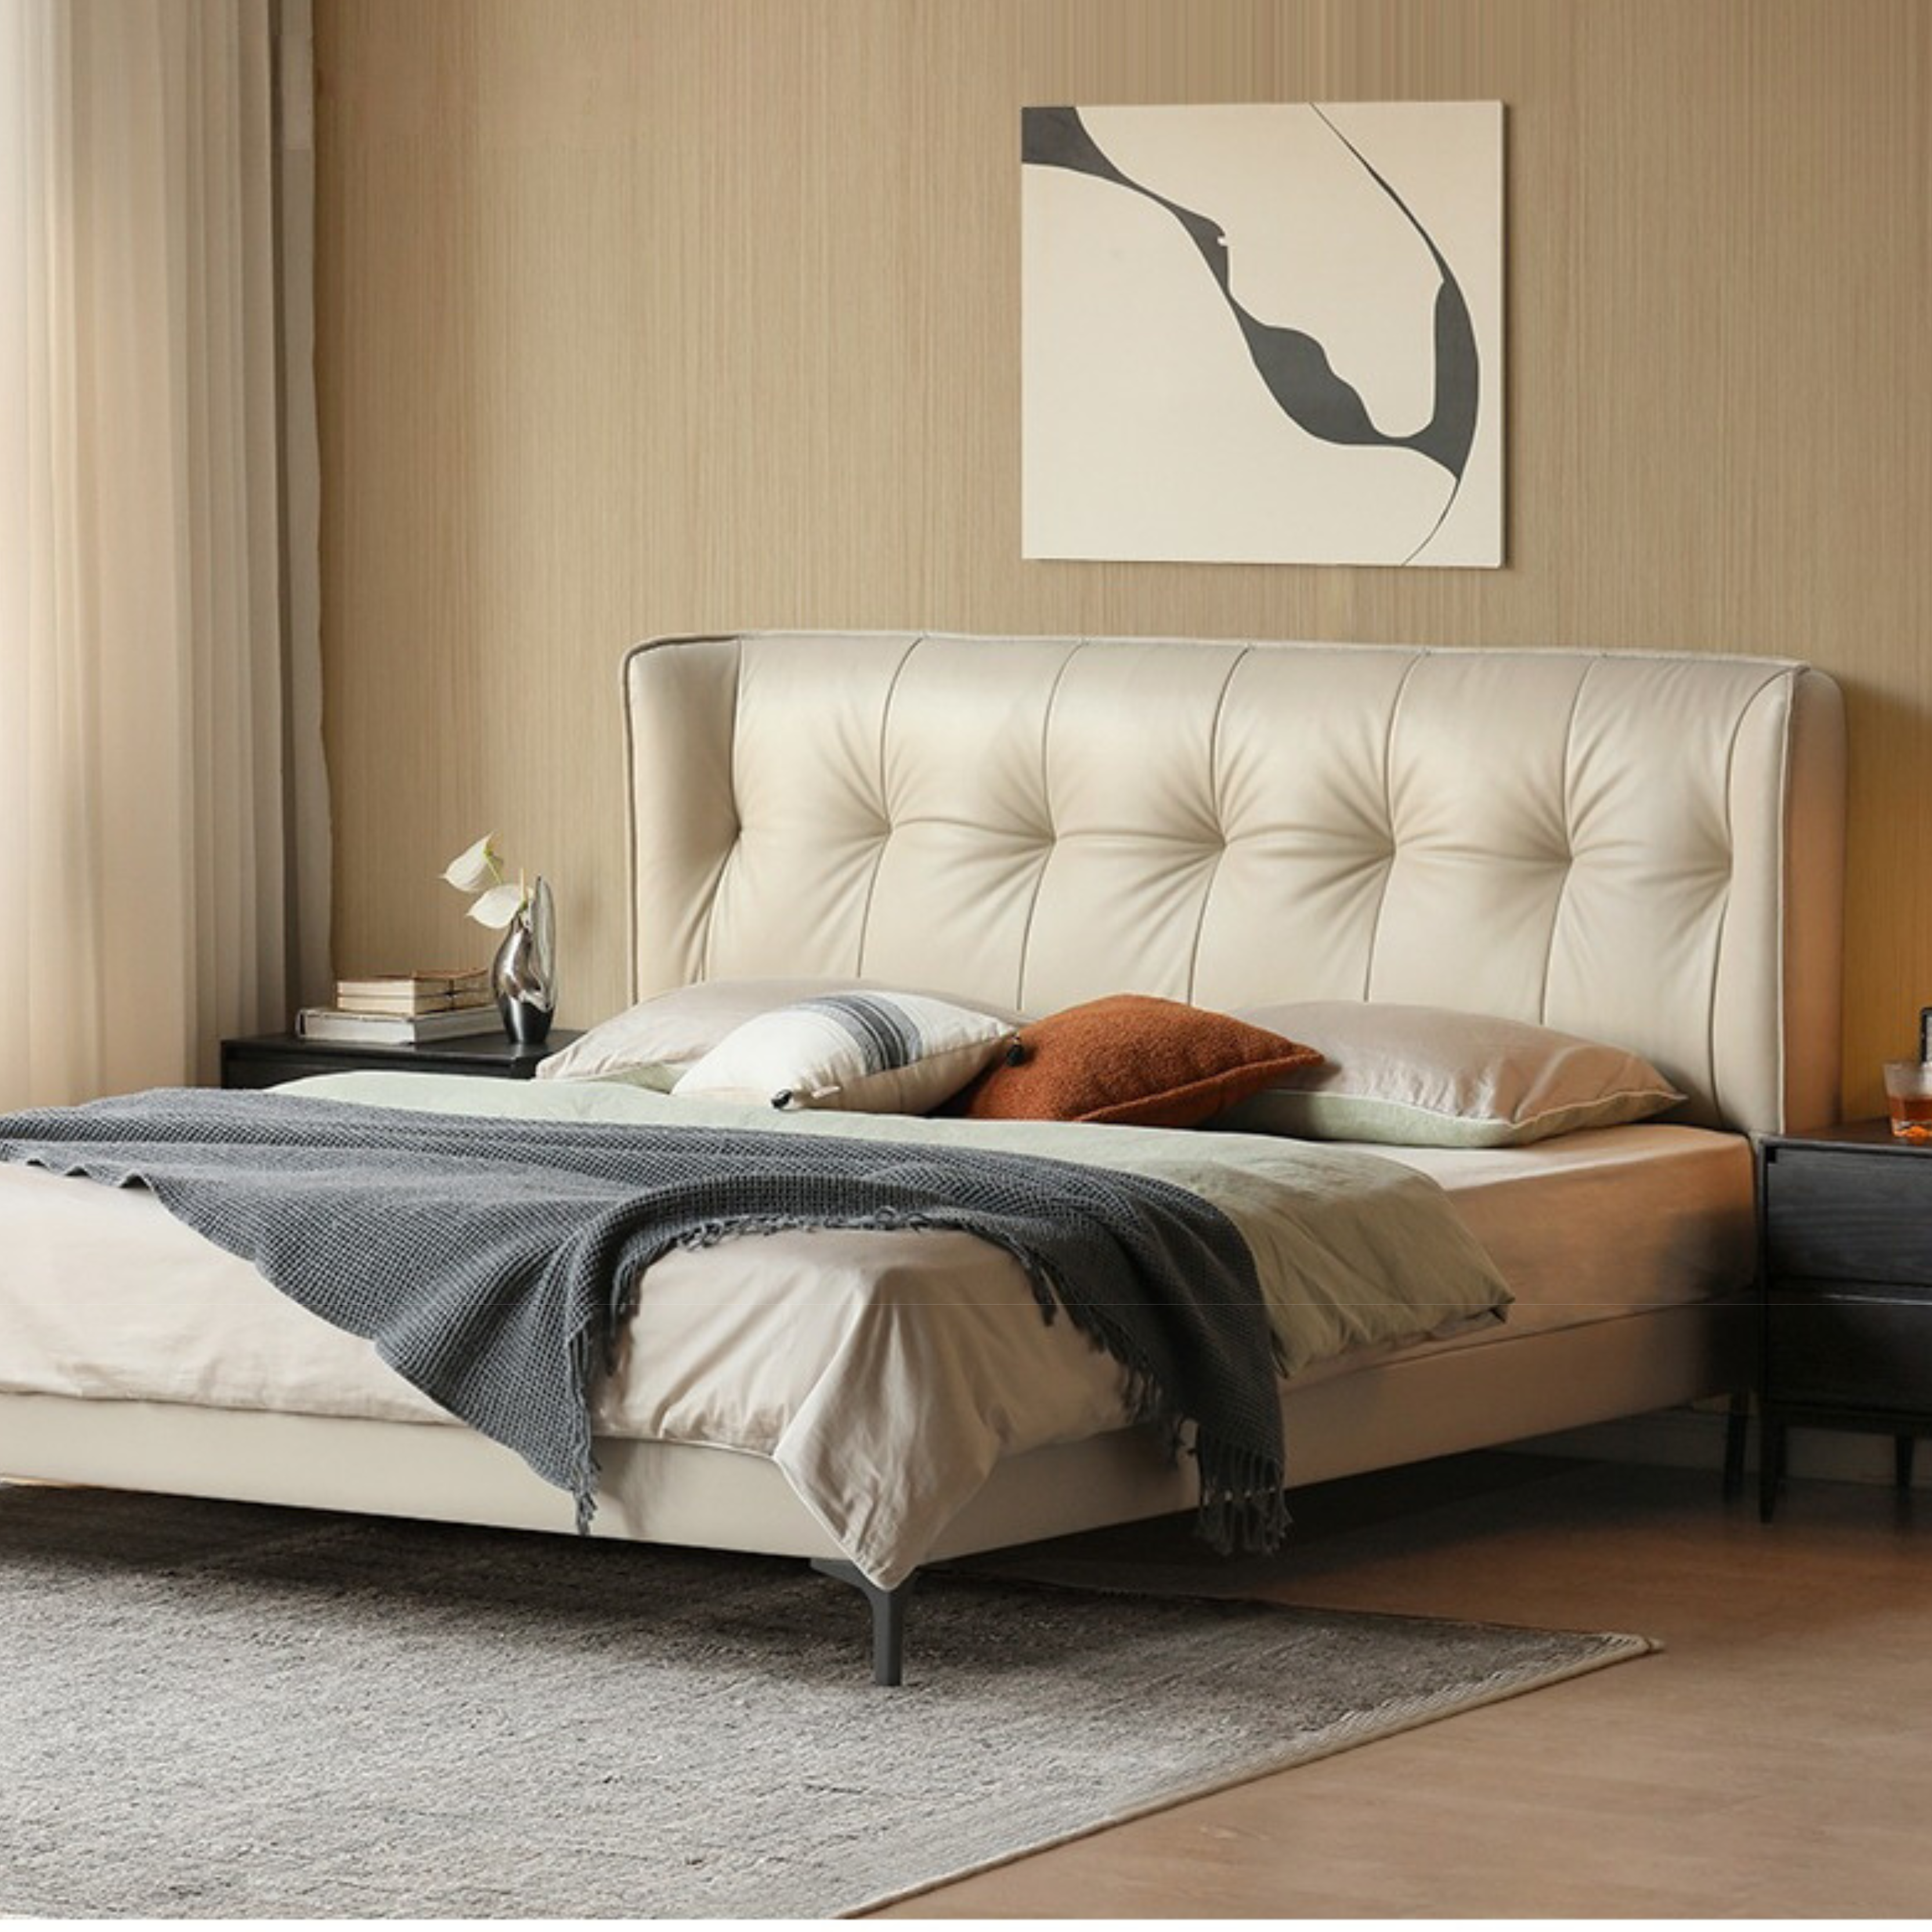 Genuine Leather Light Luxury Edge Bed, Wedding Bed")